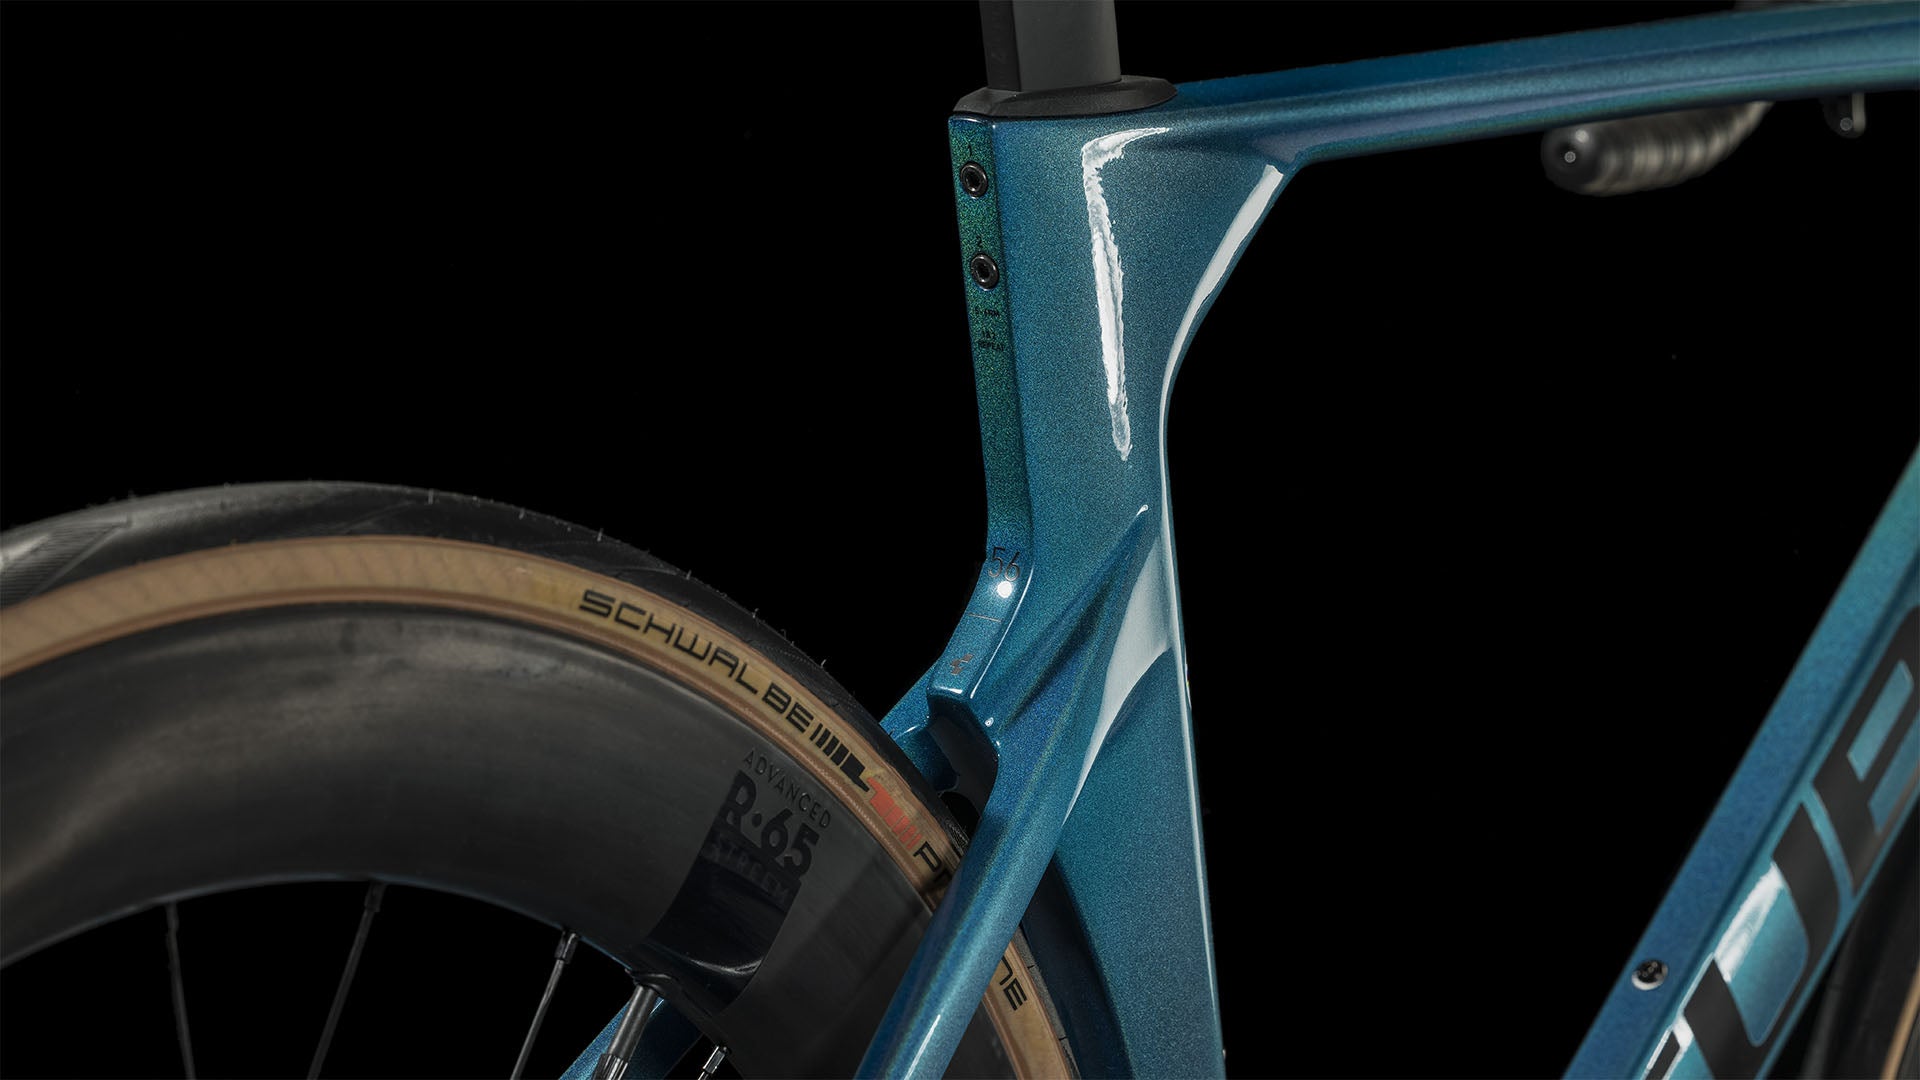 Bicicleta Litening AERO C:68X SLT - Azul